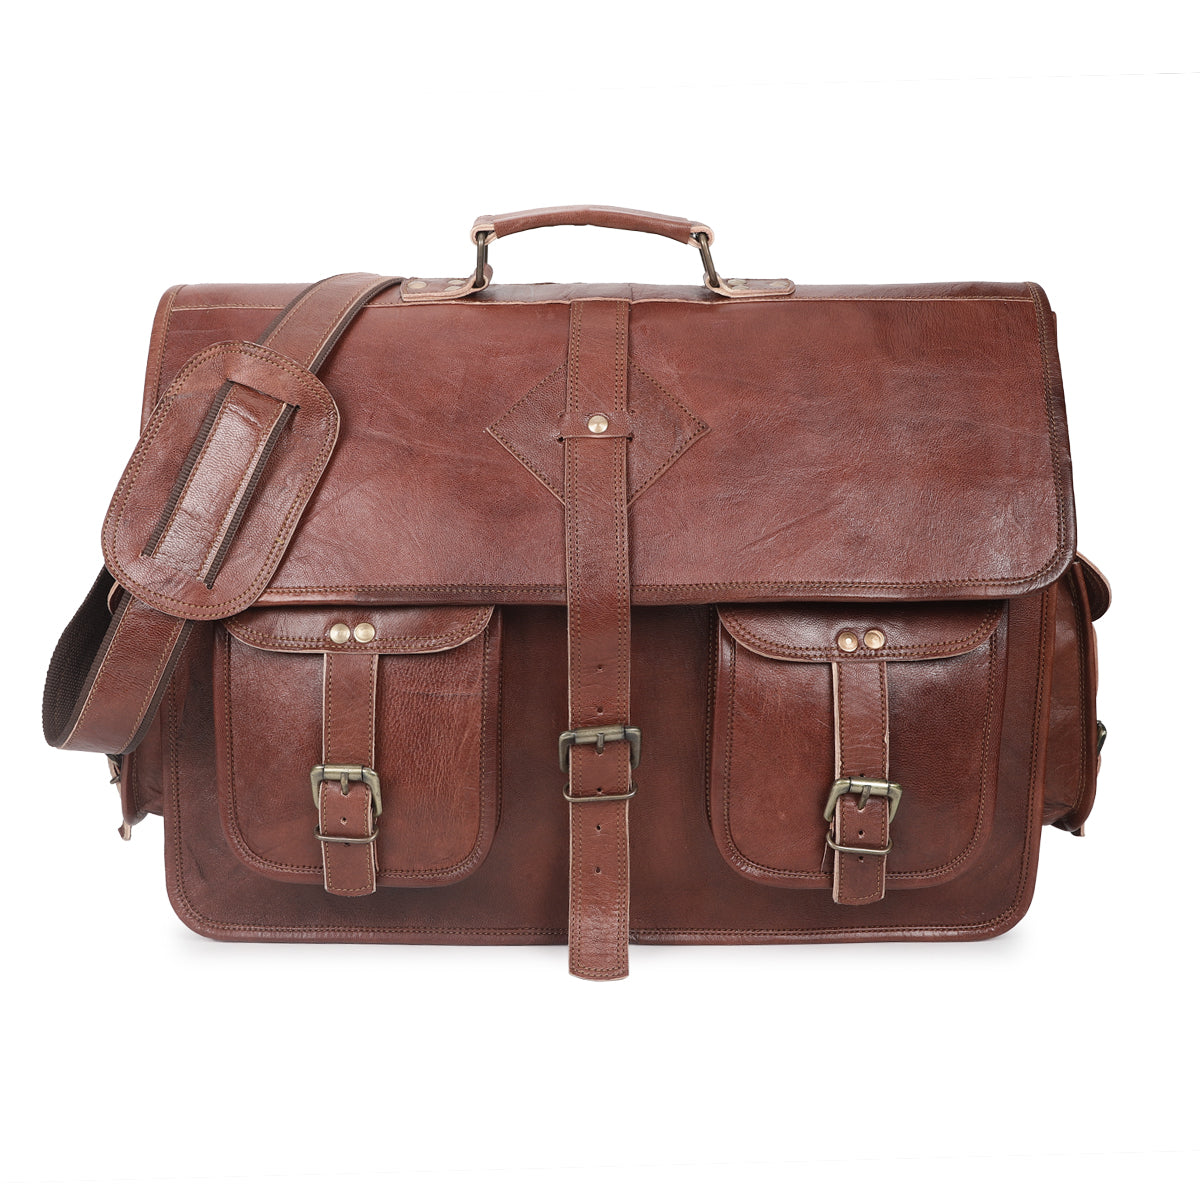 Rustic brown leather messenger bag